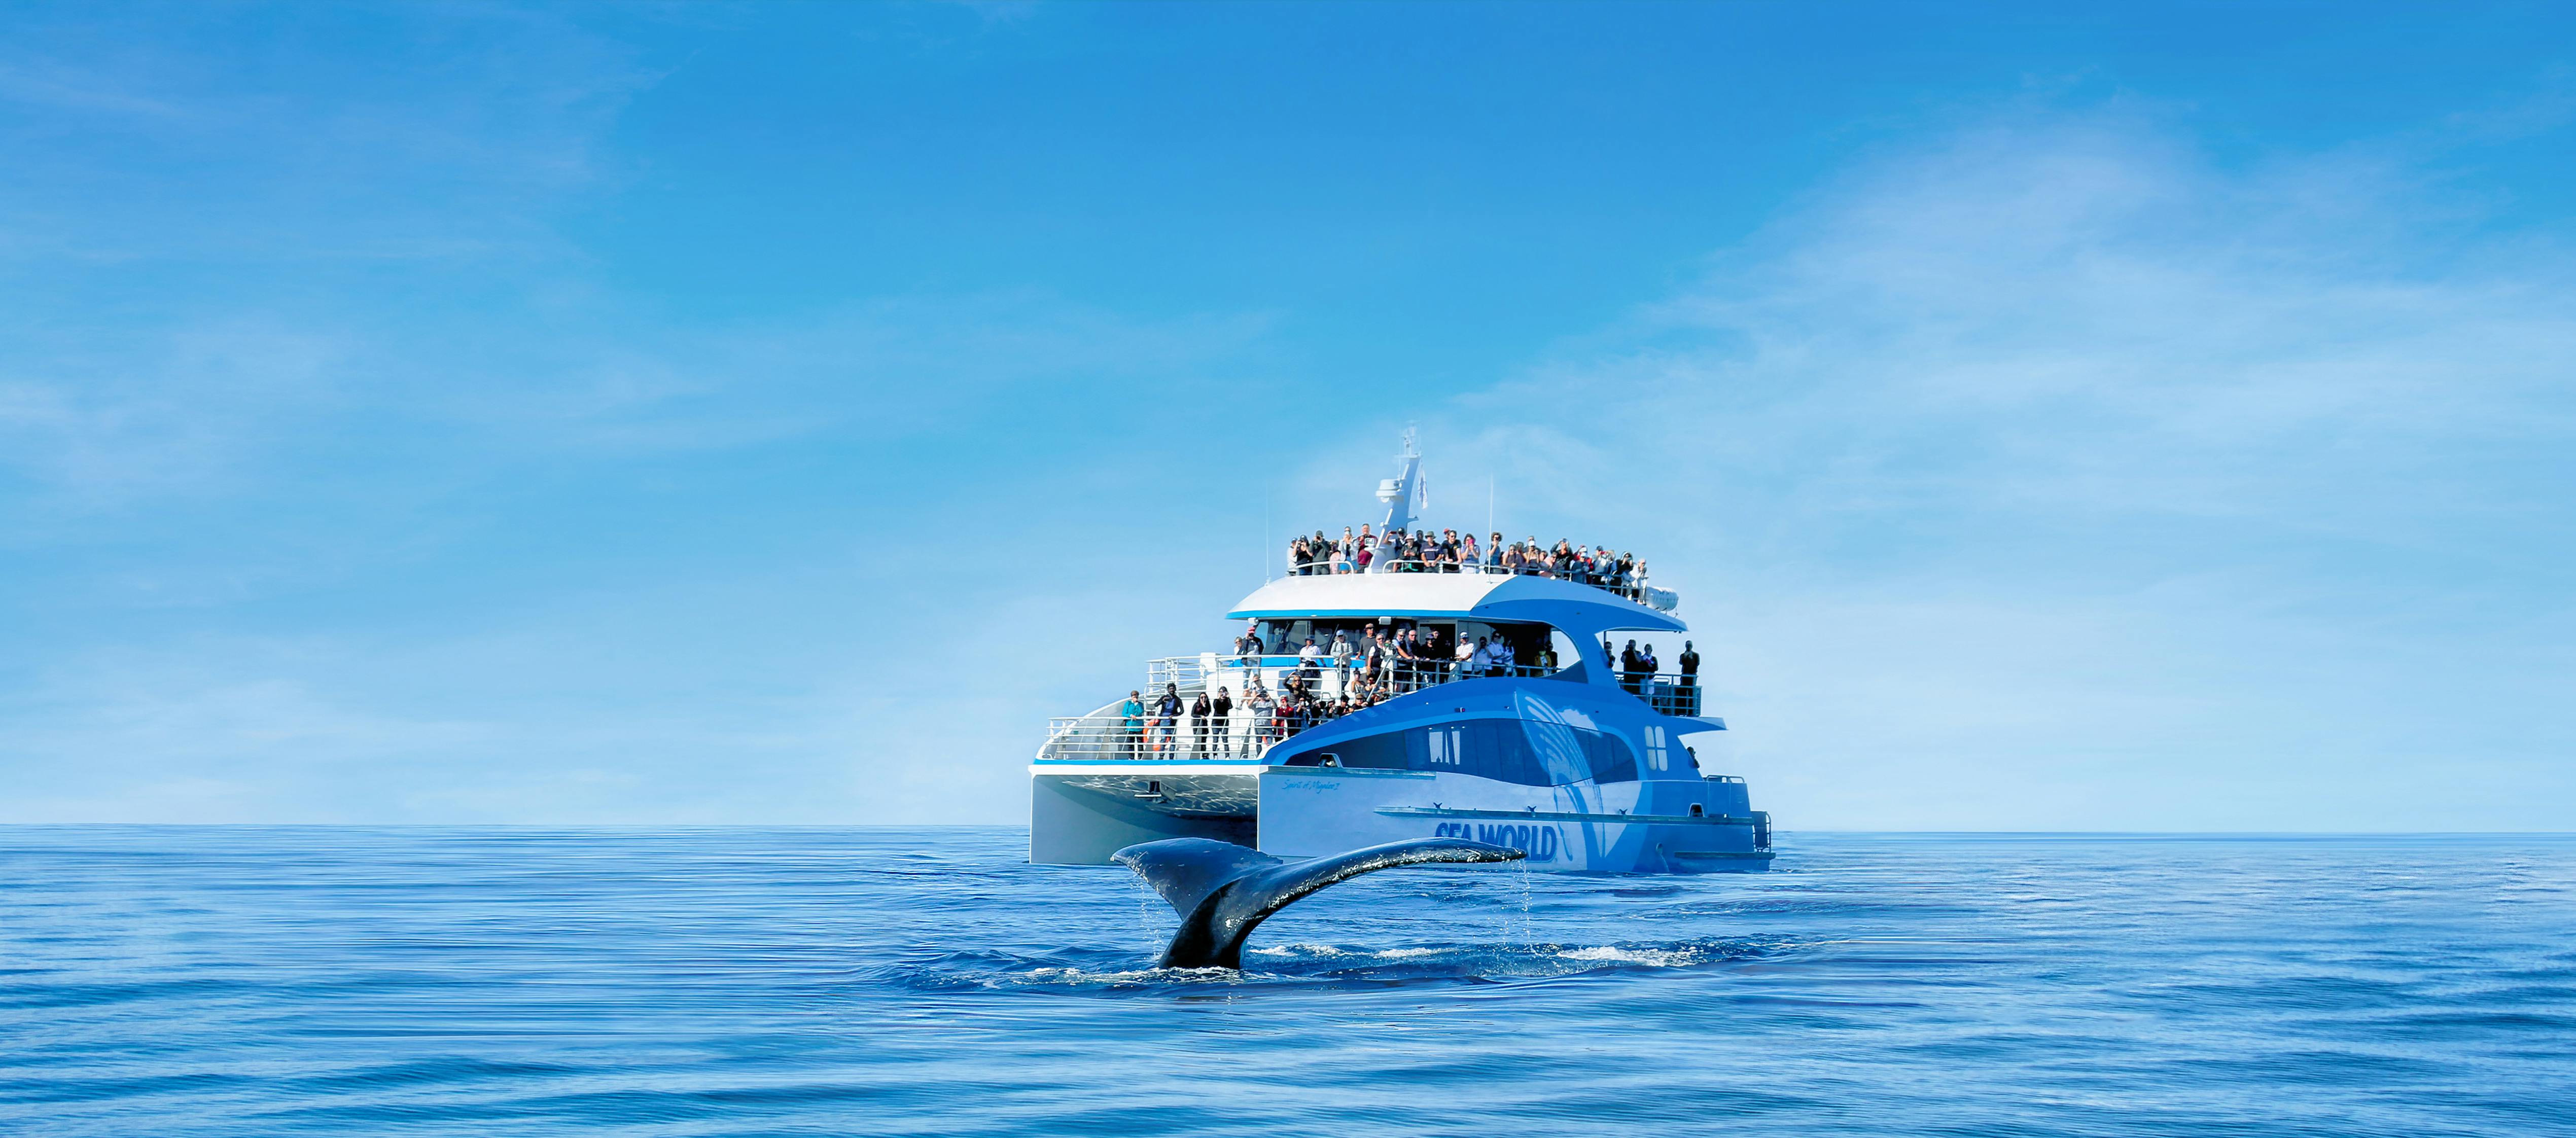 Sea World whale-watching cruise with 100% sighting guarantee